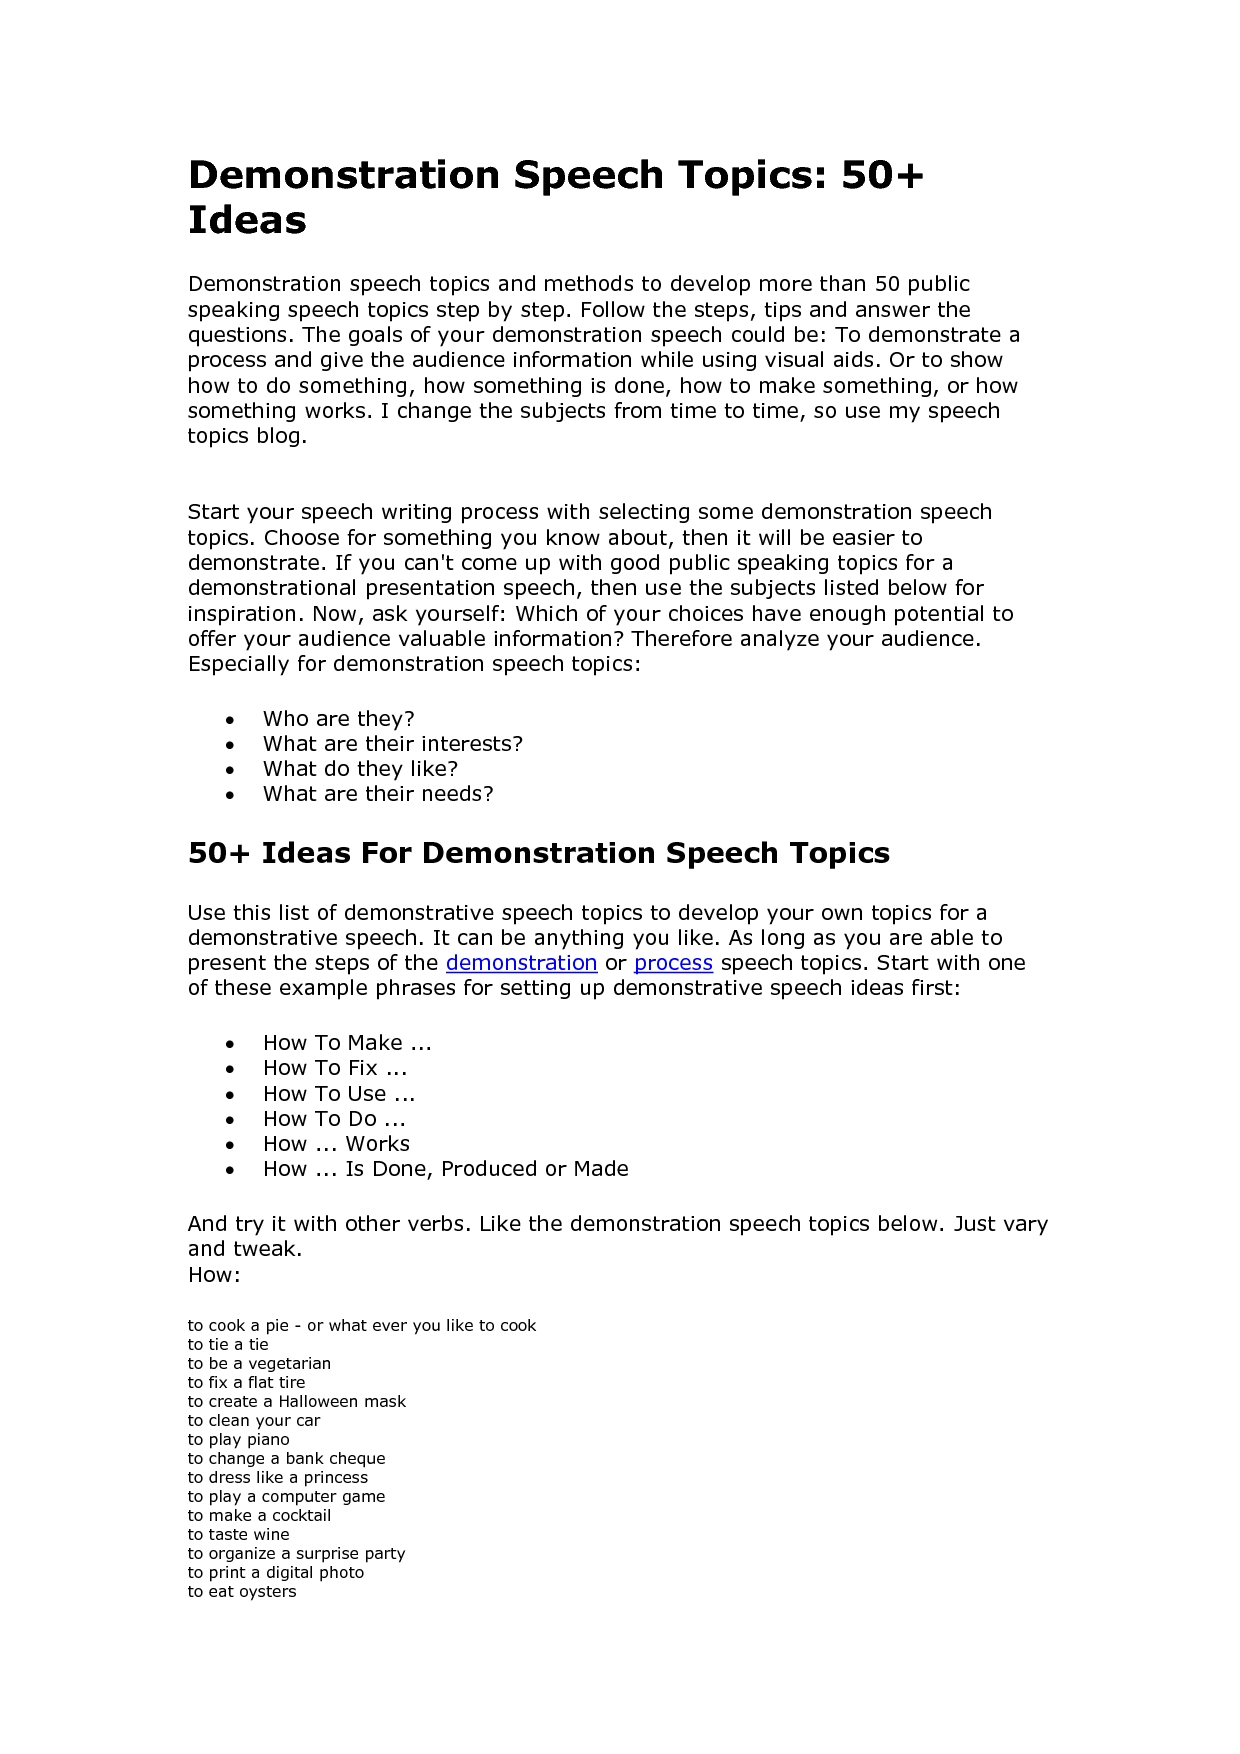 10 Elegant Ideas For A Demonstration Speech outline demonstration speech topics google search school 16 2022